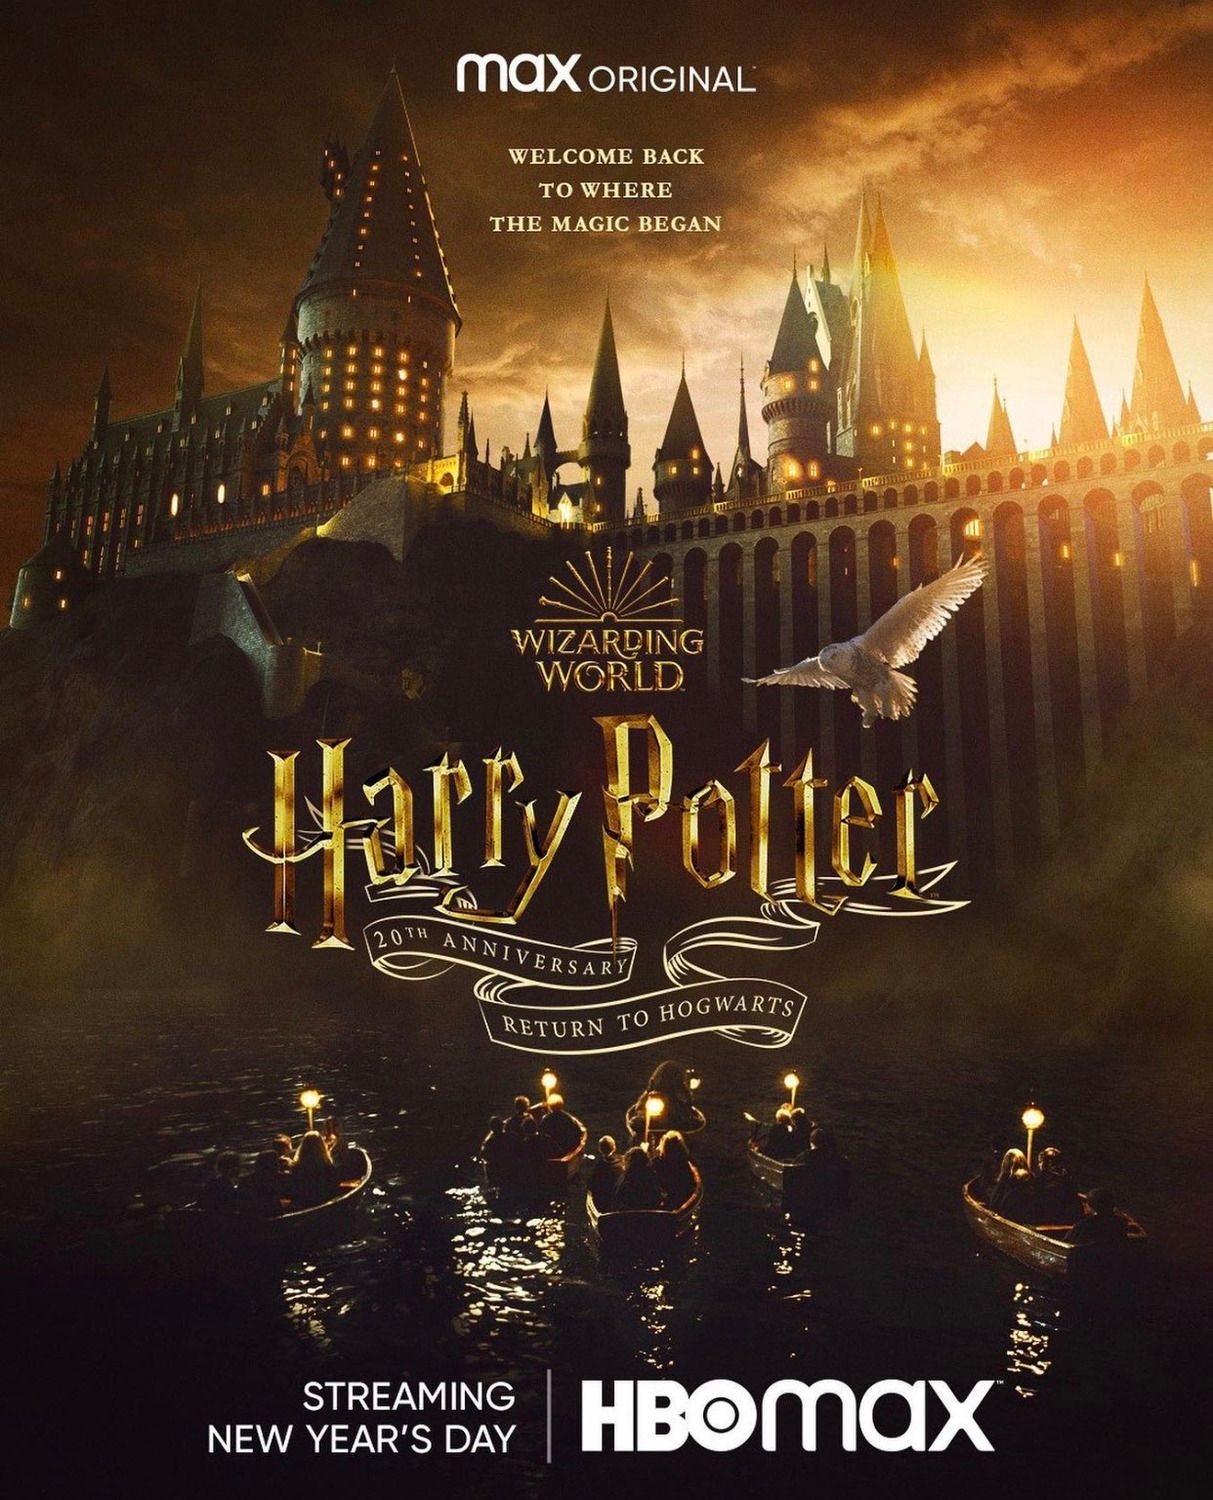 Harry Potter 20th Anniversary Return to Hogwarts Trailer Brings the Magic